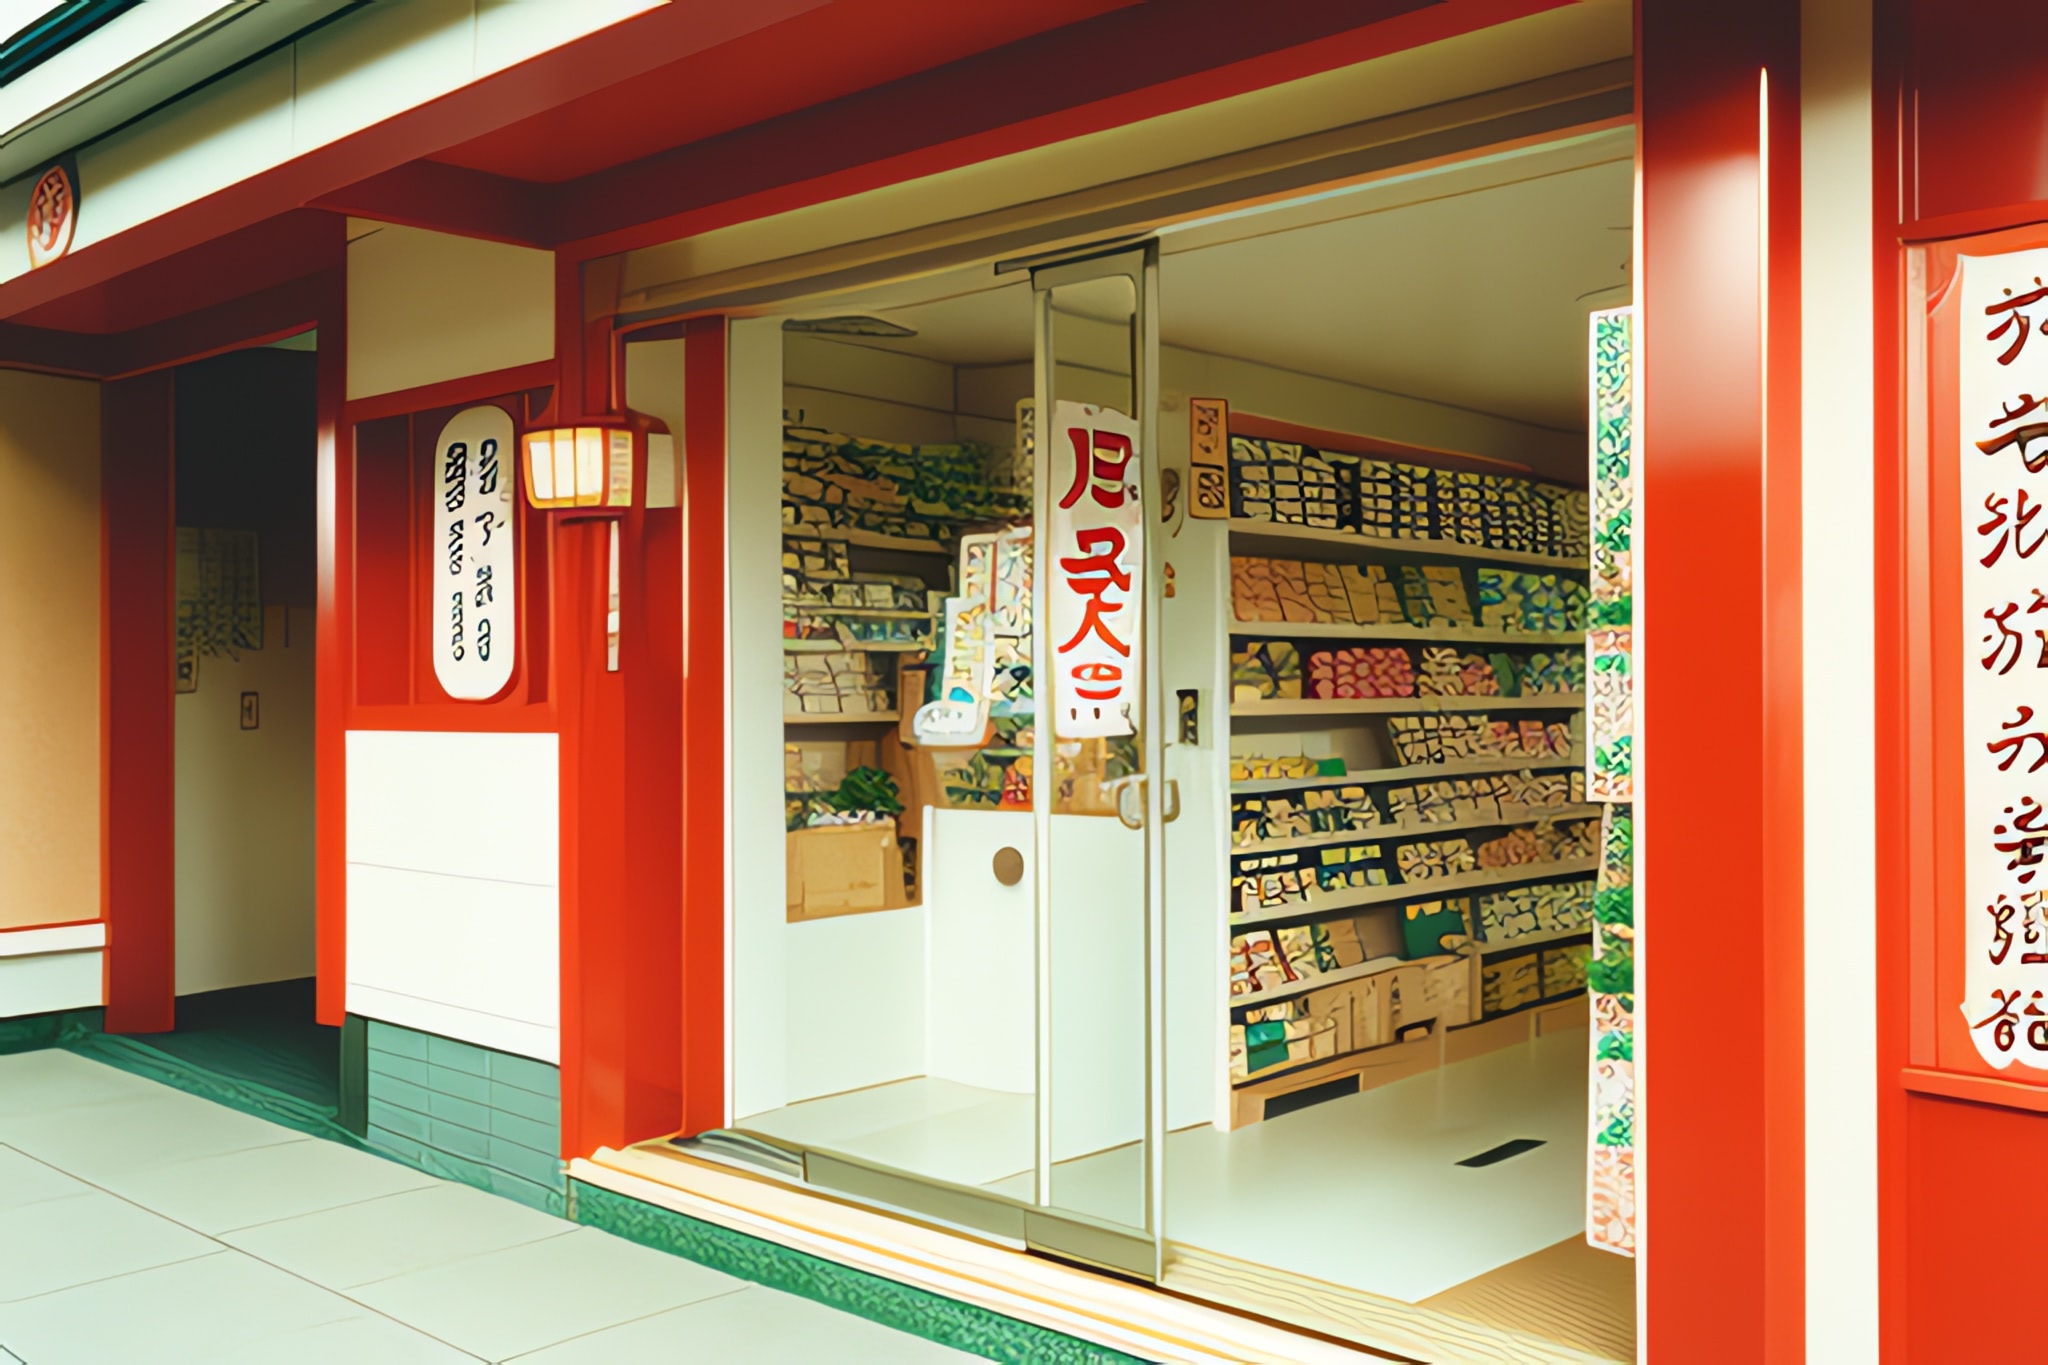 Door-of-a-Japanese-convenience-store-wide-shot-gvxz